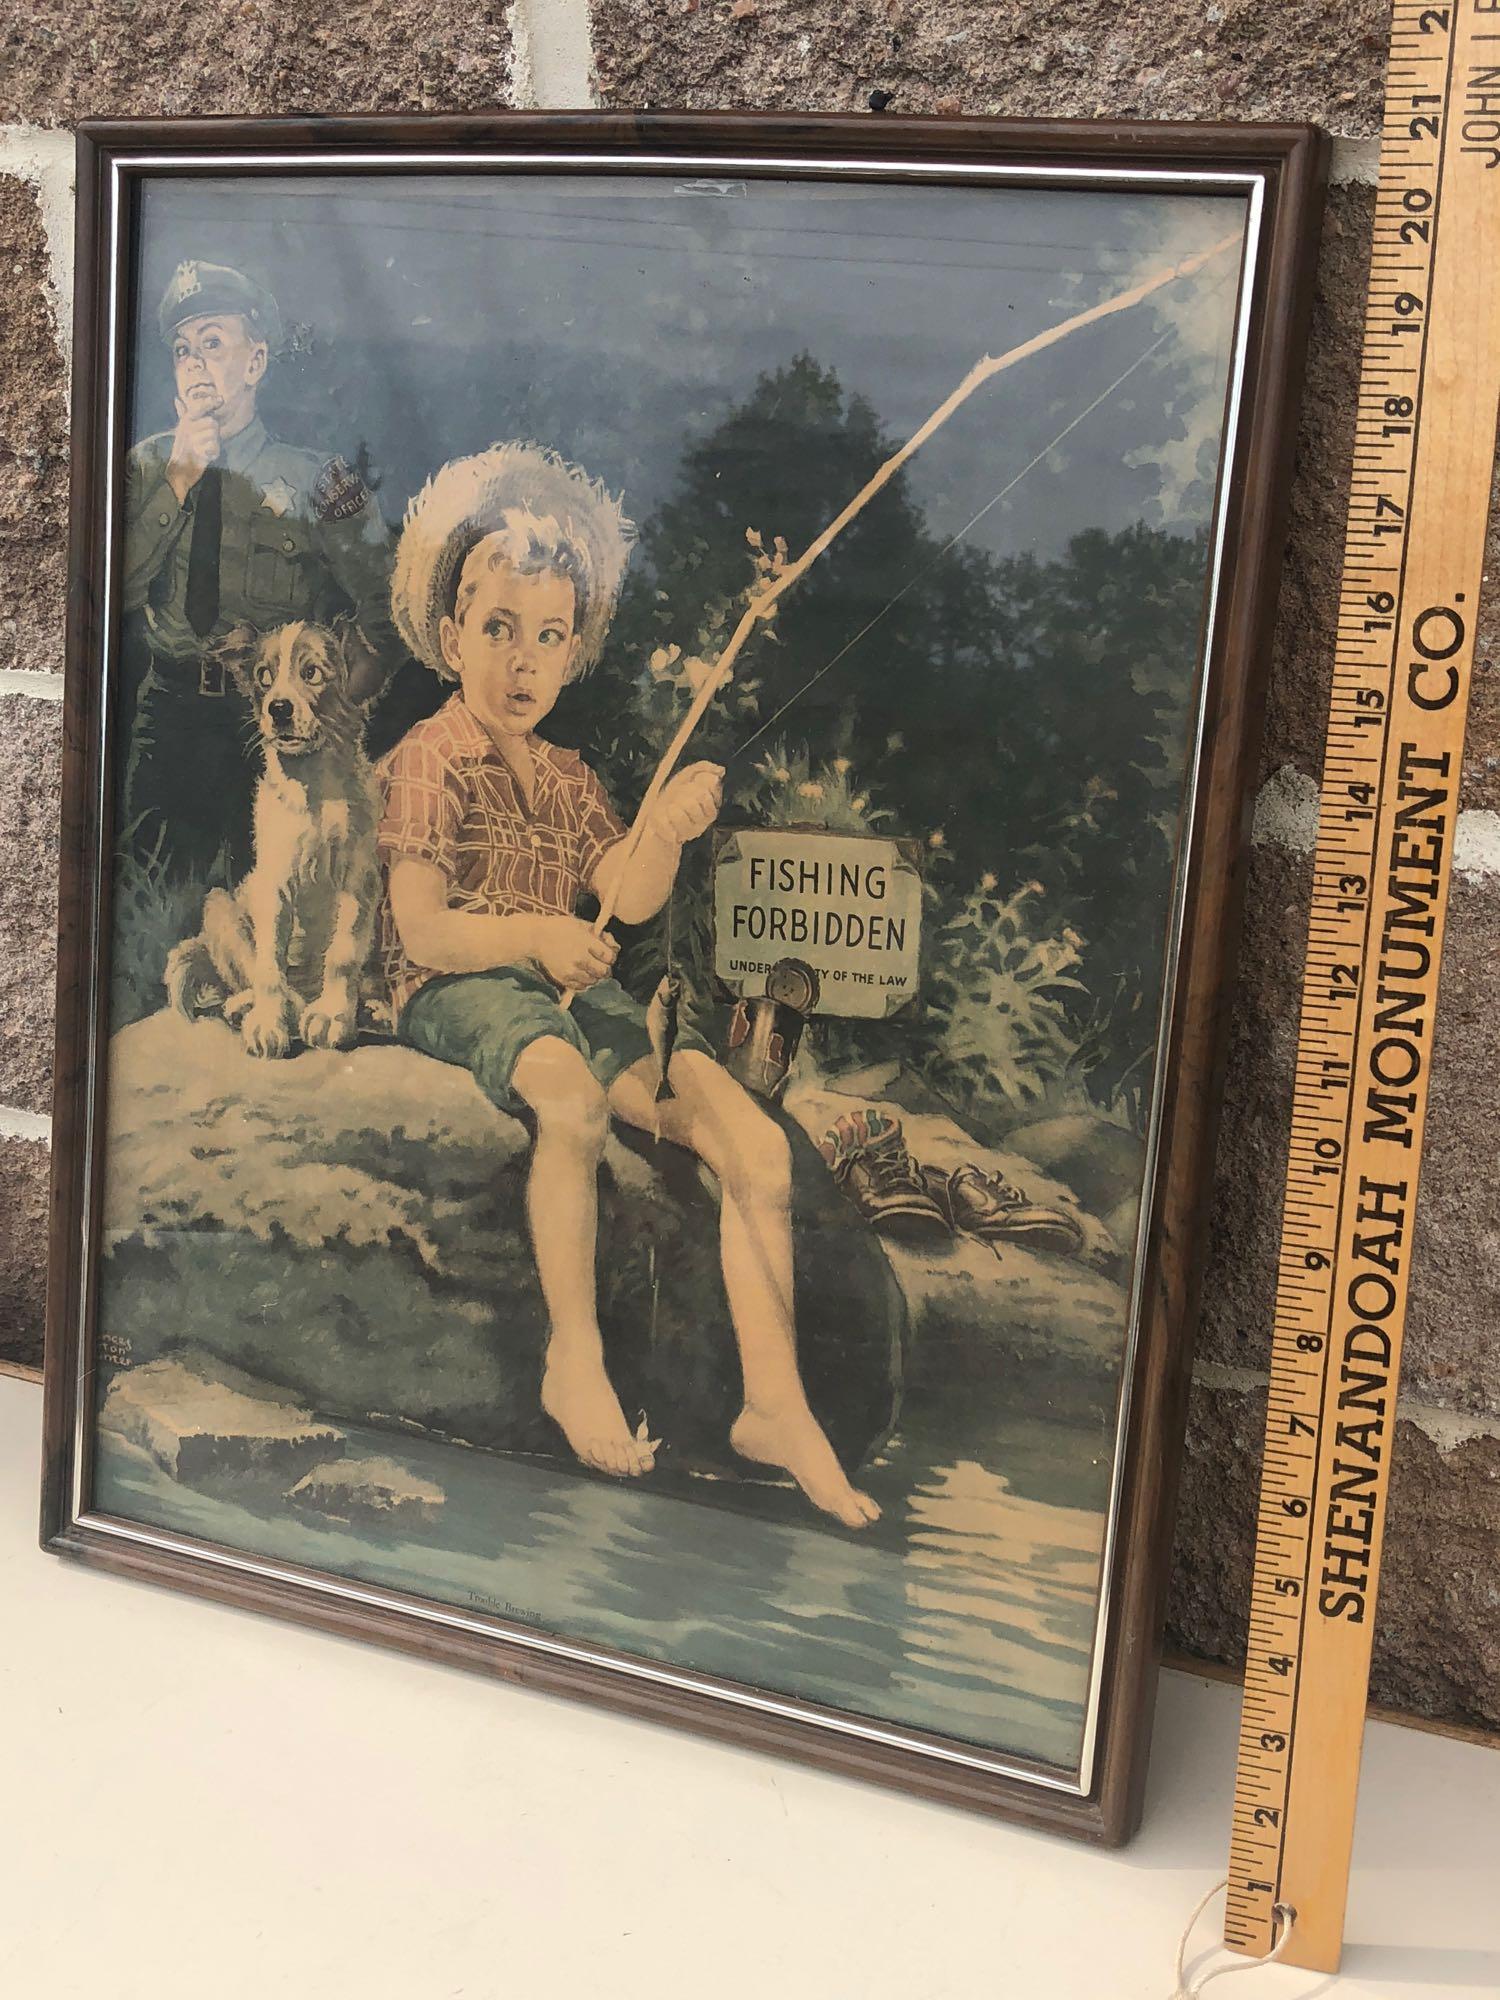 VINTAGE 1950"S "TROUBLE BREWING" BOY FISHING ART PRINT BY FRANCES TIPTON HUNTER Framed